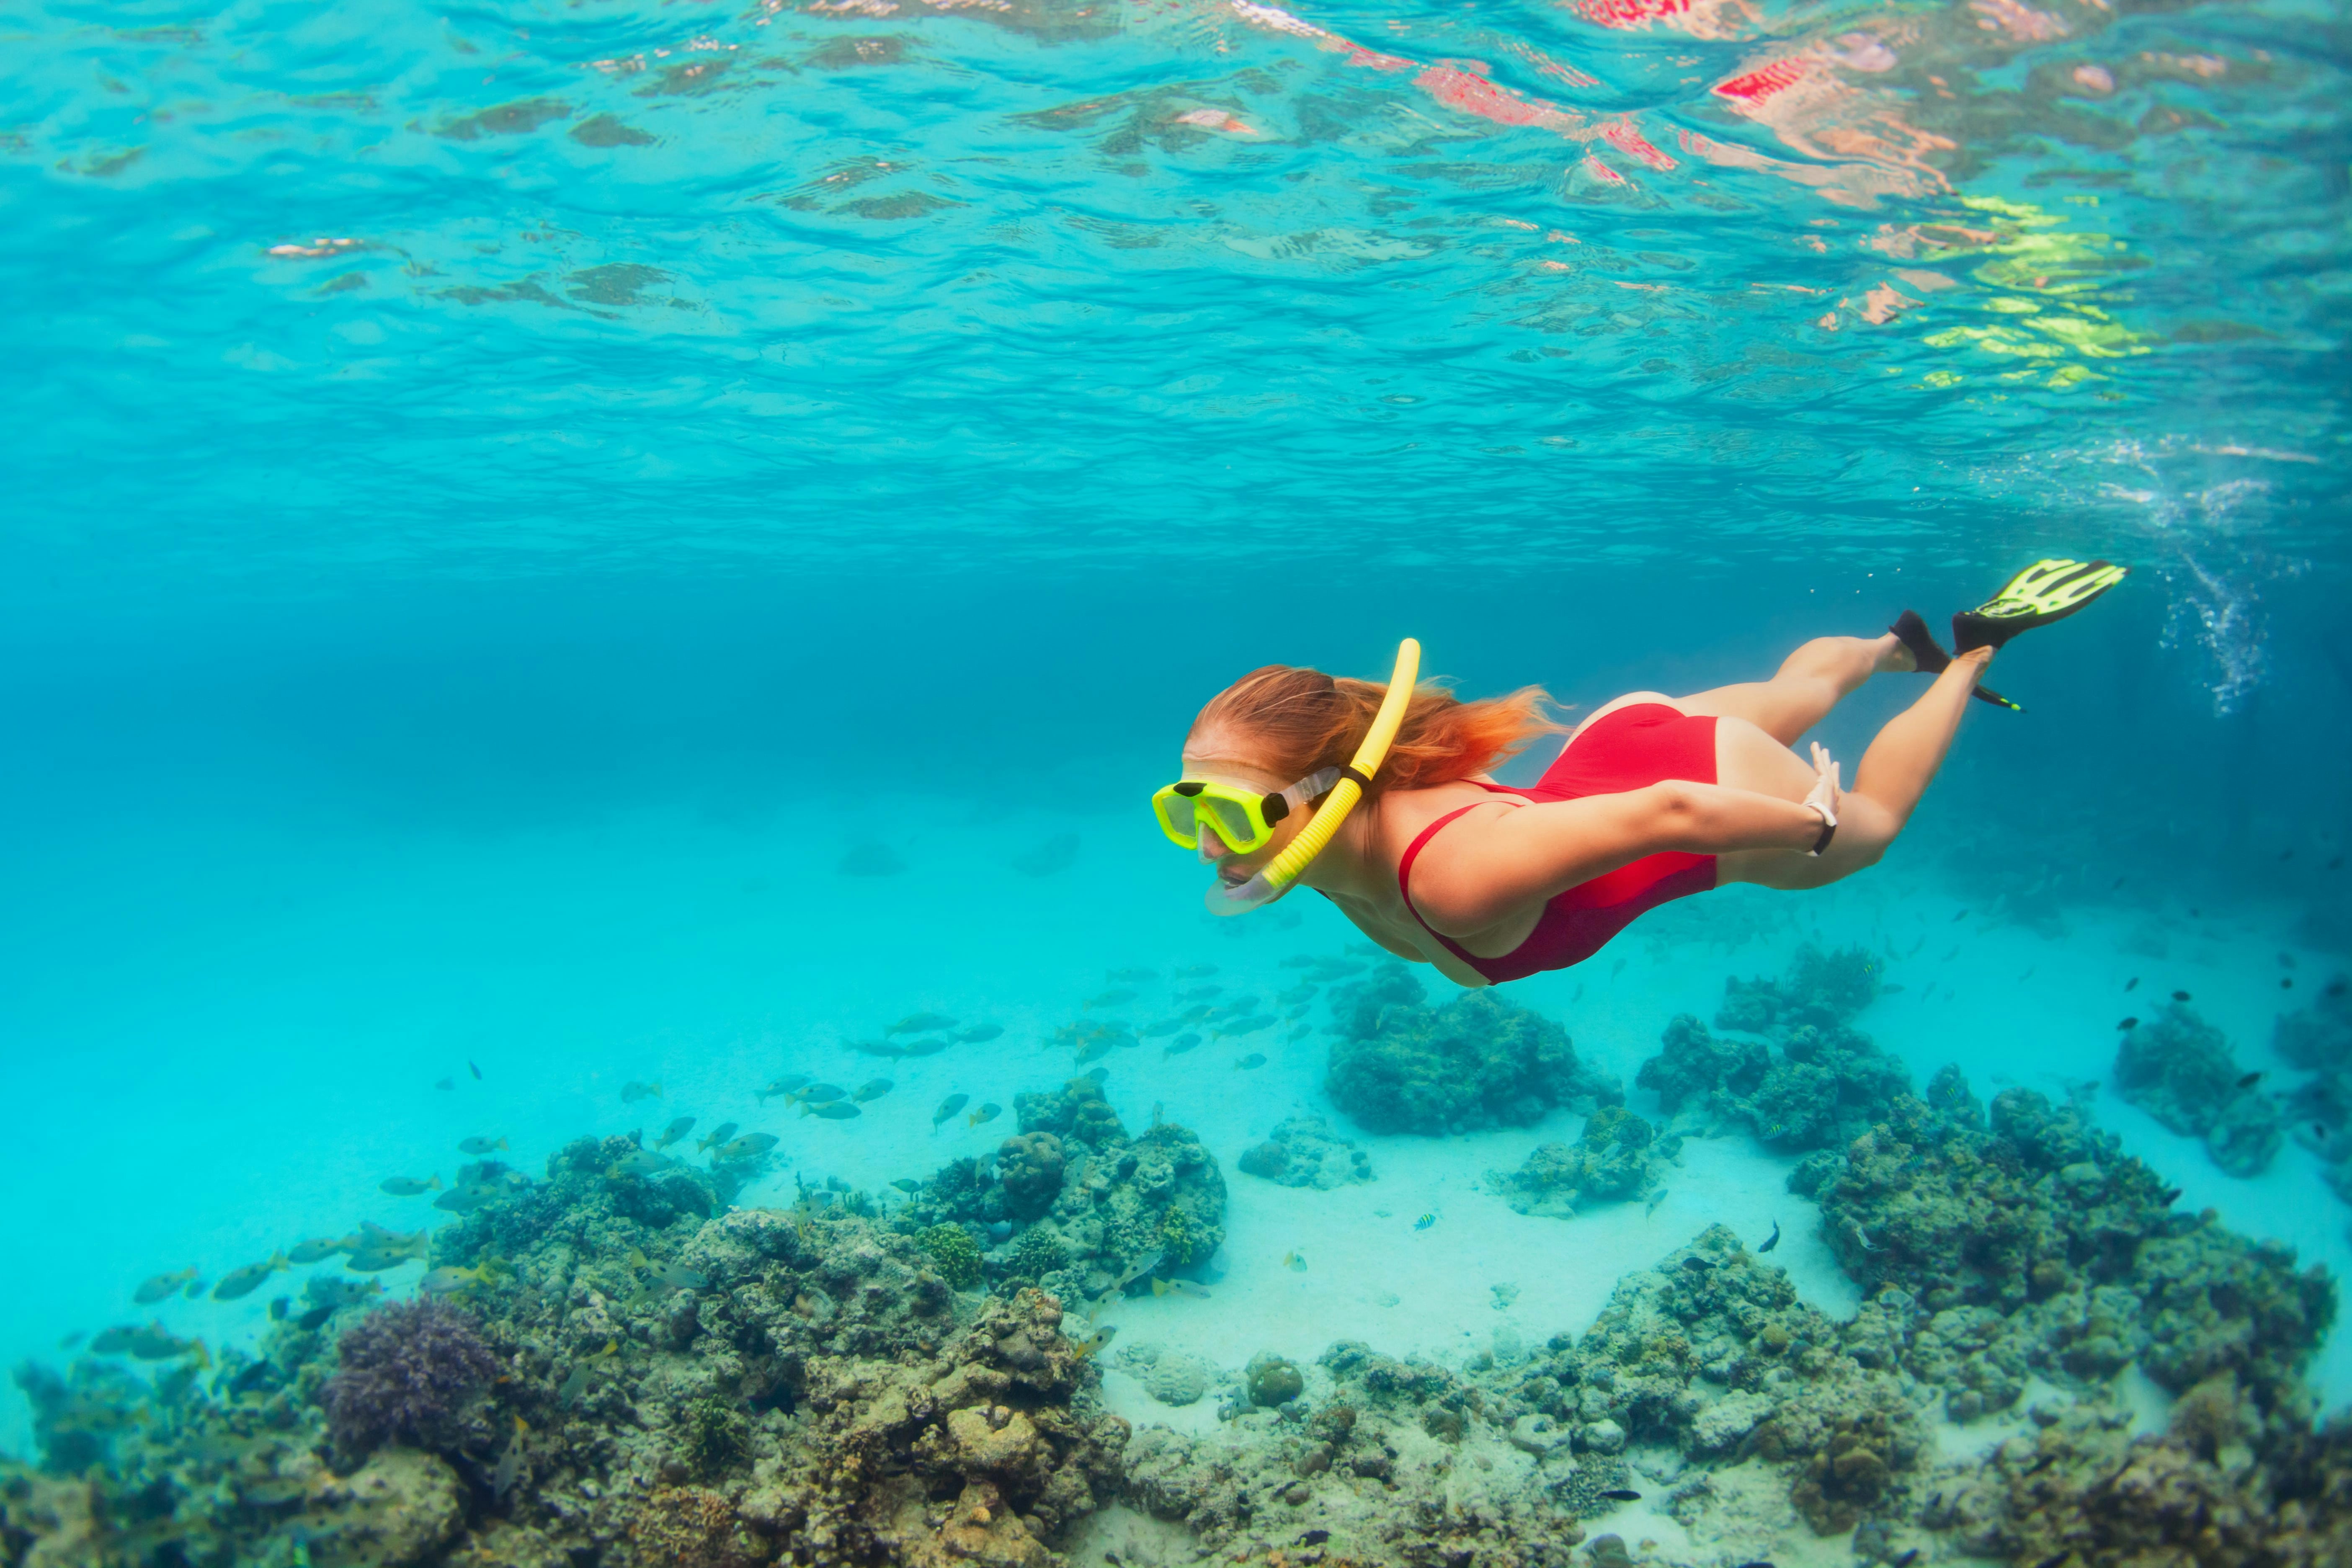 neutrogena reef safe sunscreen